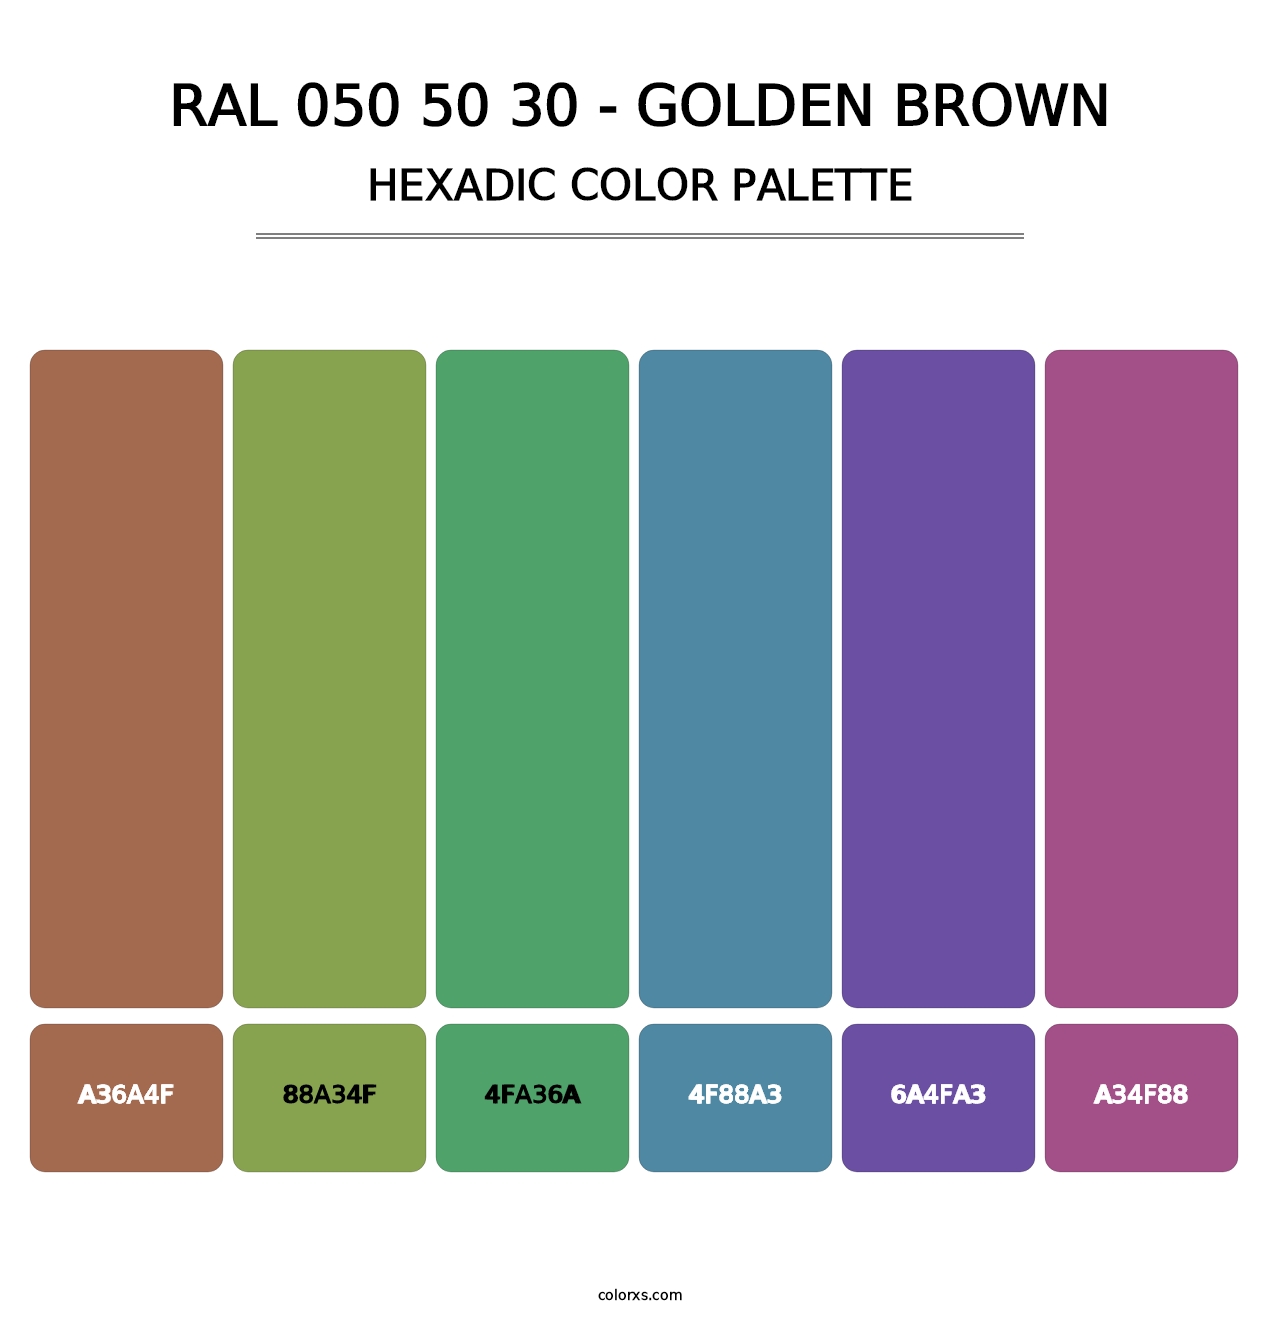 RAL 050 50 30 - Golden Brown - Hexadic Color Palette